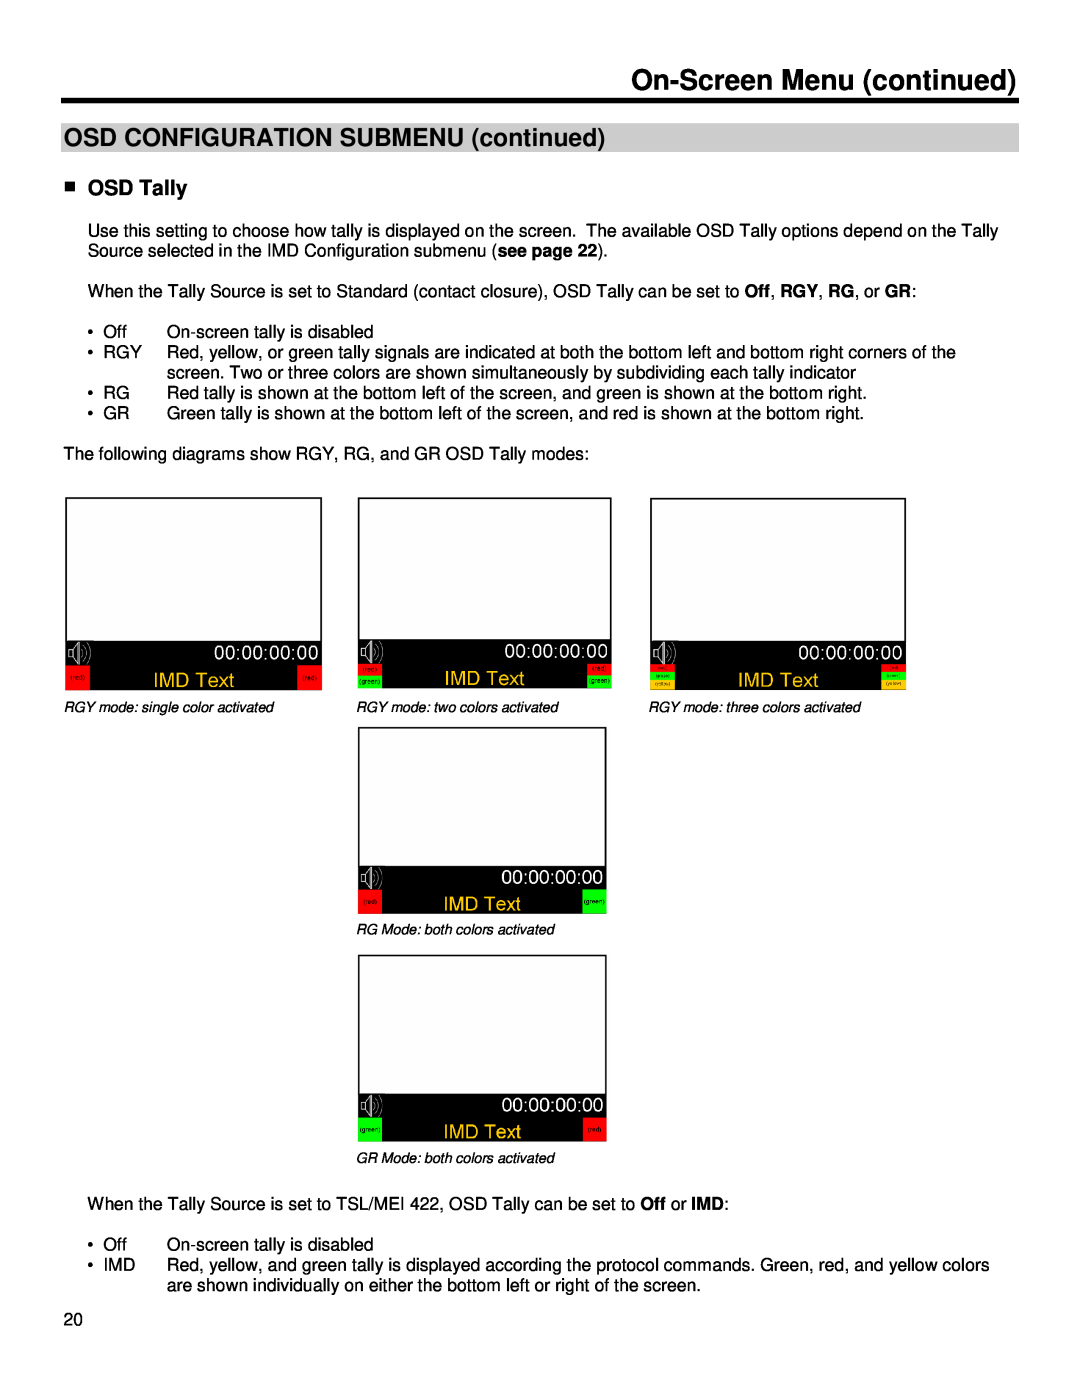 Marshall electronic V-R653SB-IMD manual OSD CONFIGURATION SUBMENU continued, OSD Tally, On-Screen Menu continued 